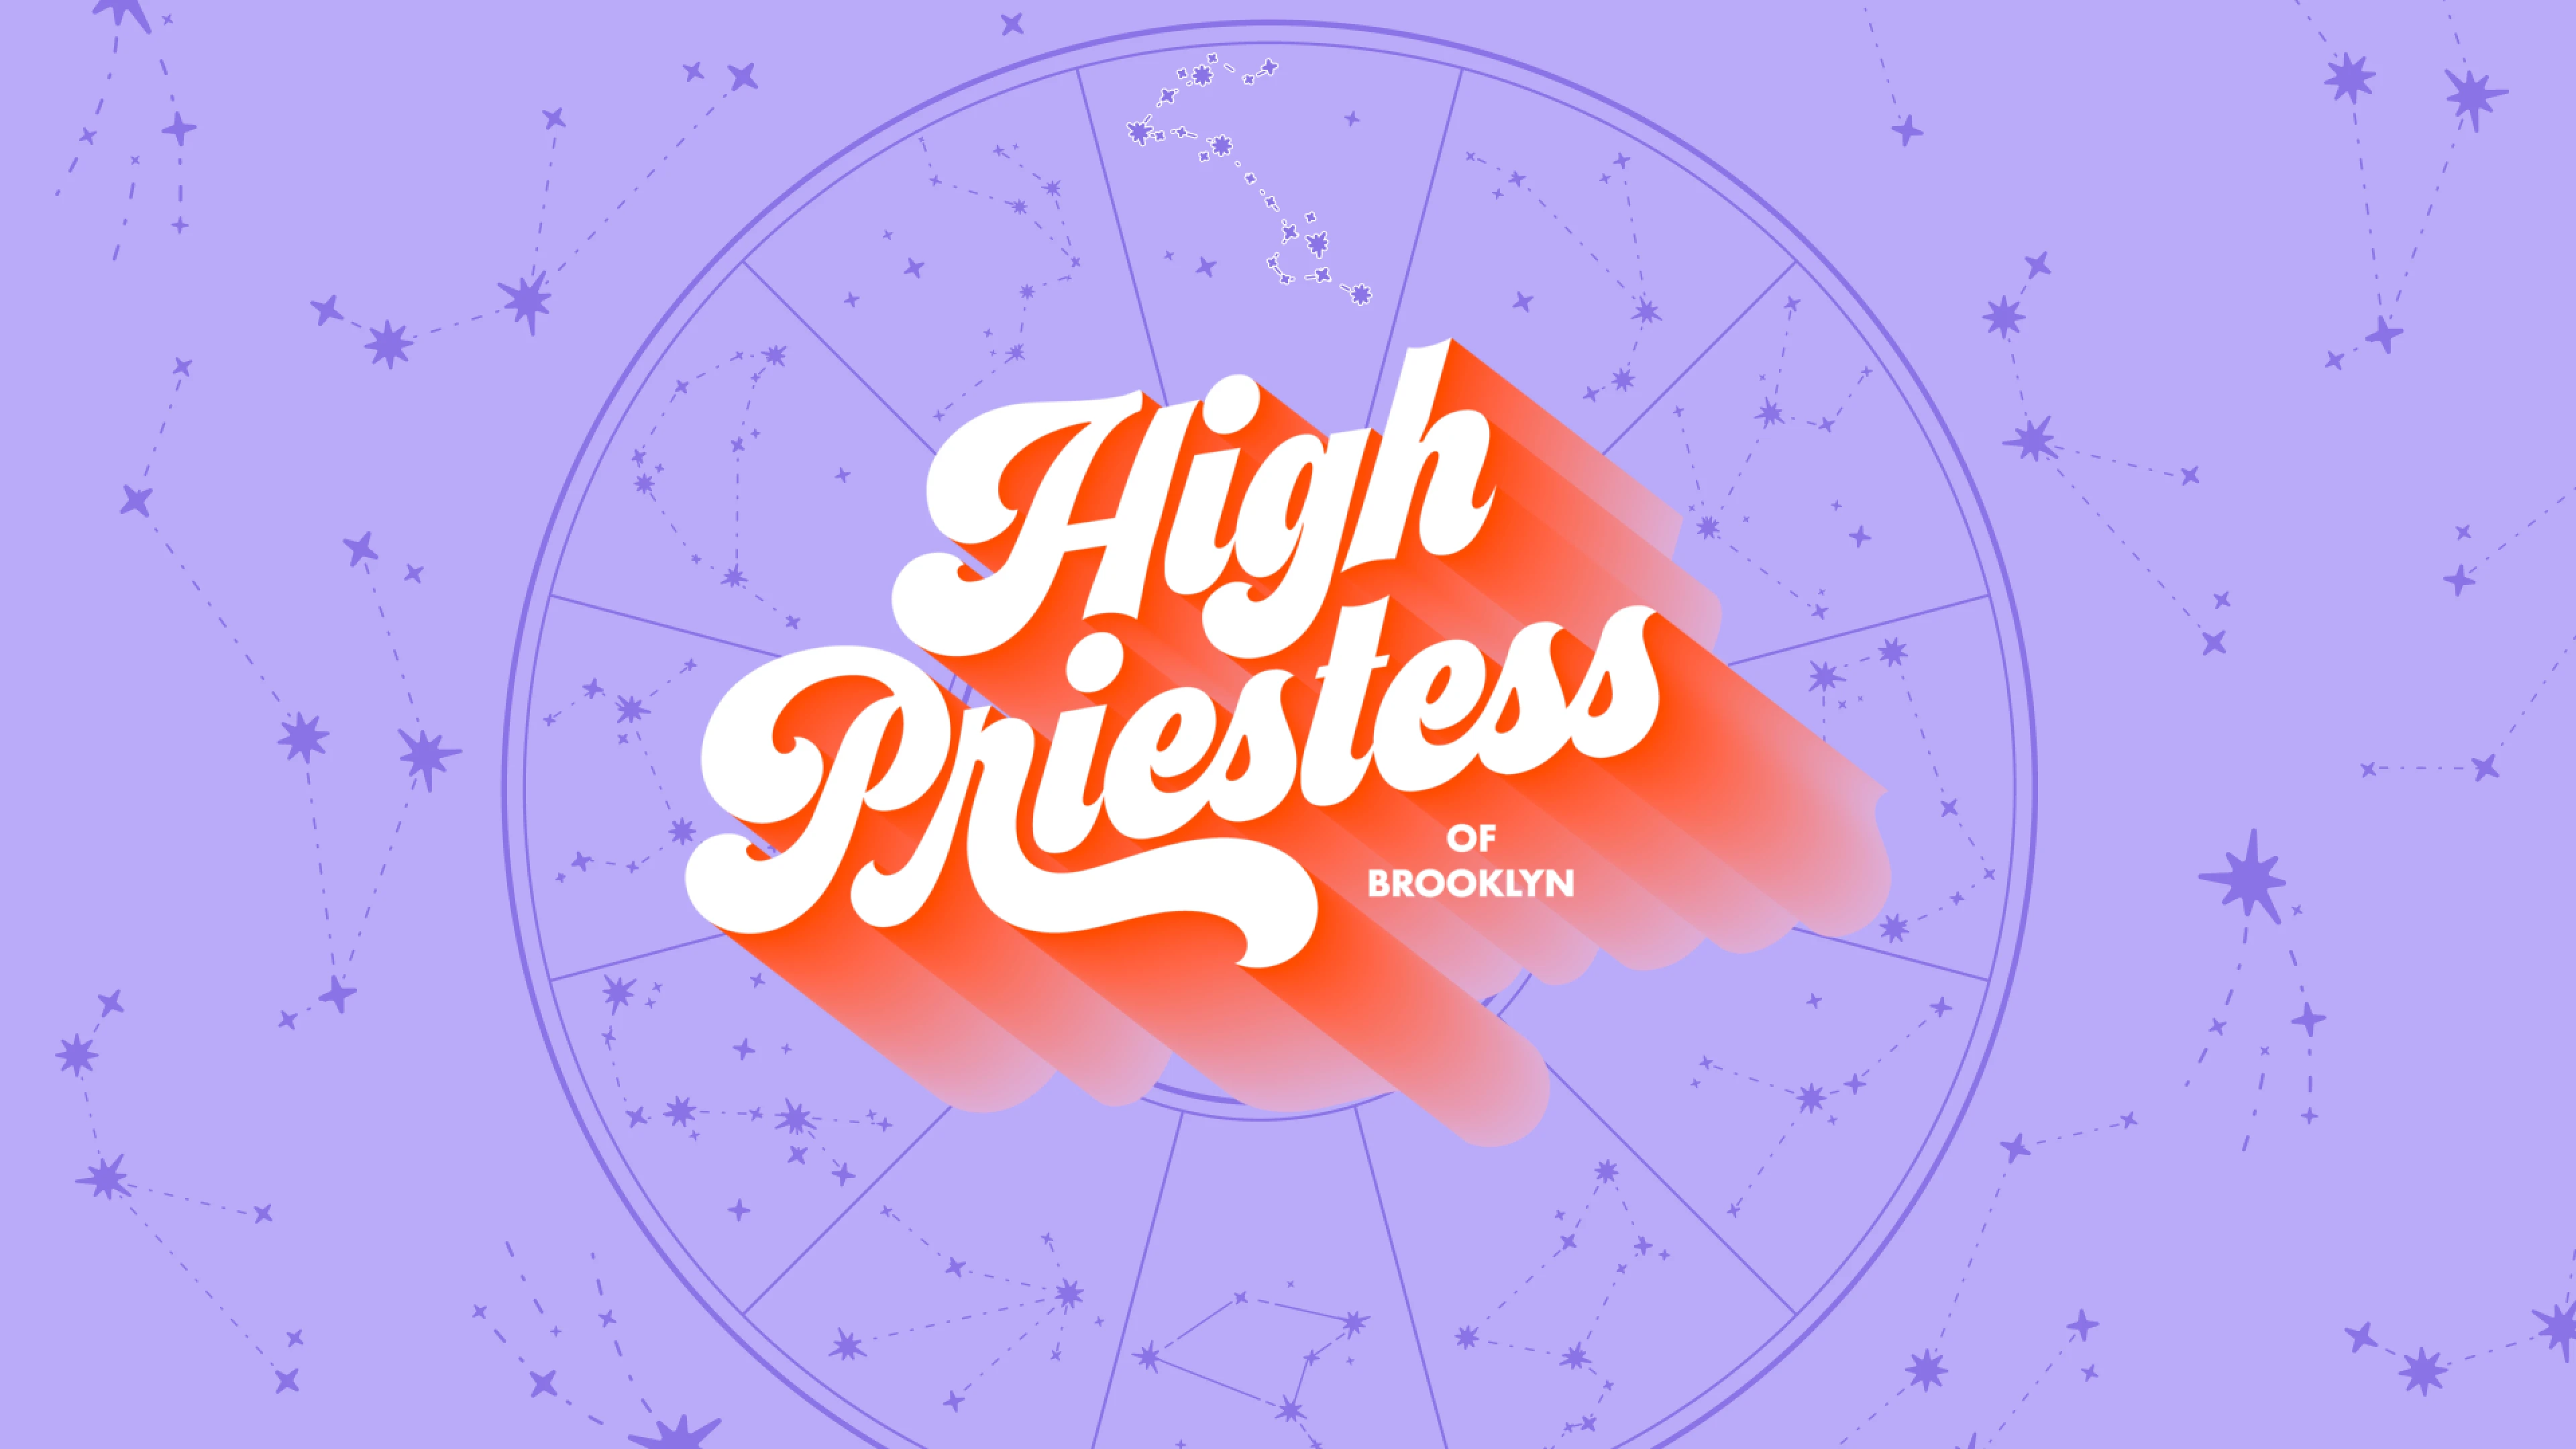 High Priestess of Brooklyn